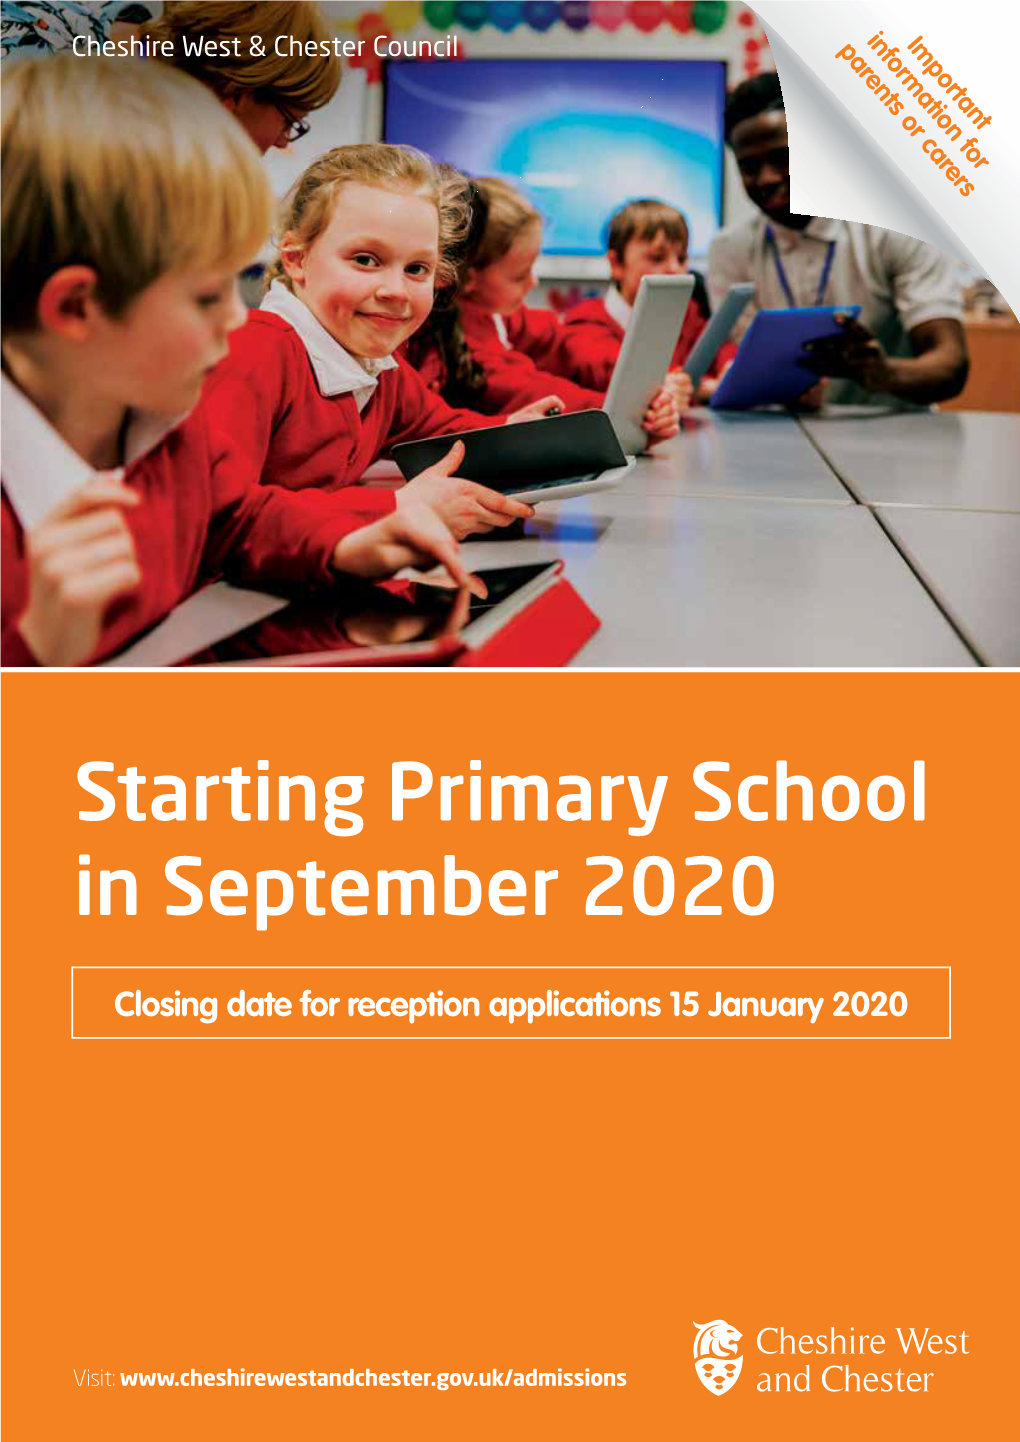 Starting Primary School in September 2020